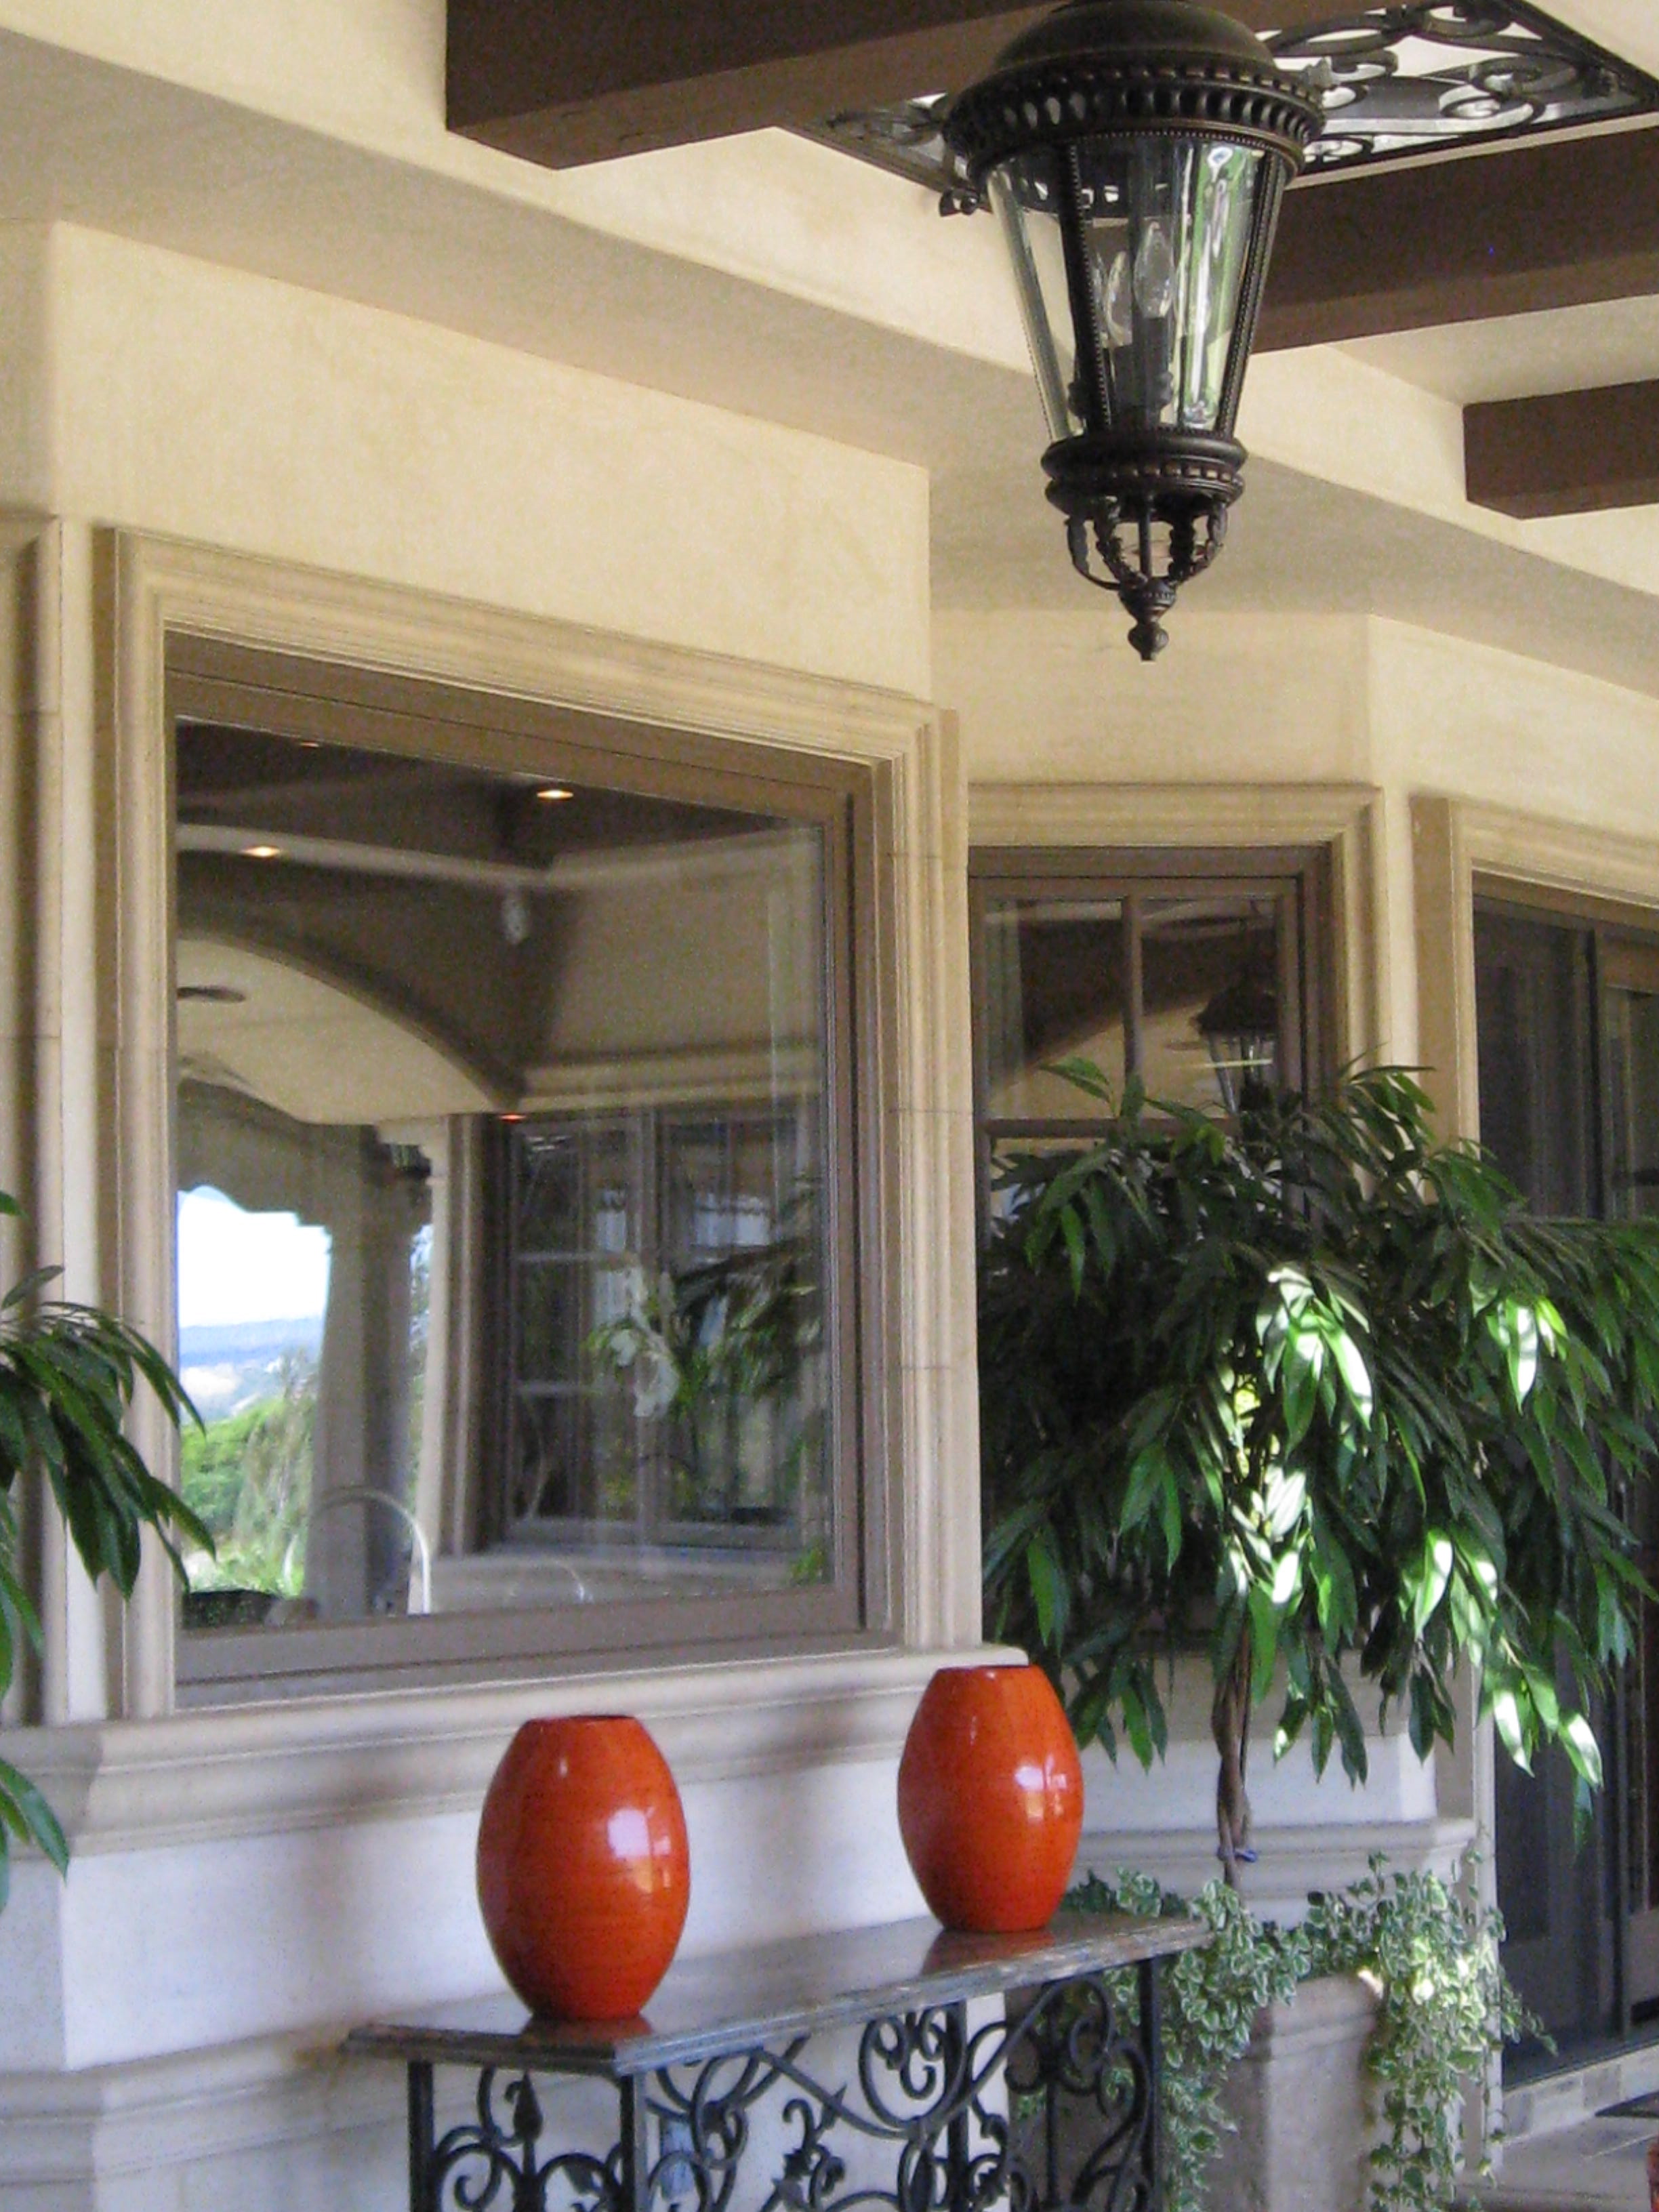 Granite to kitchen window - Calabasas Construction, Inc.